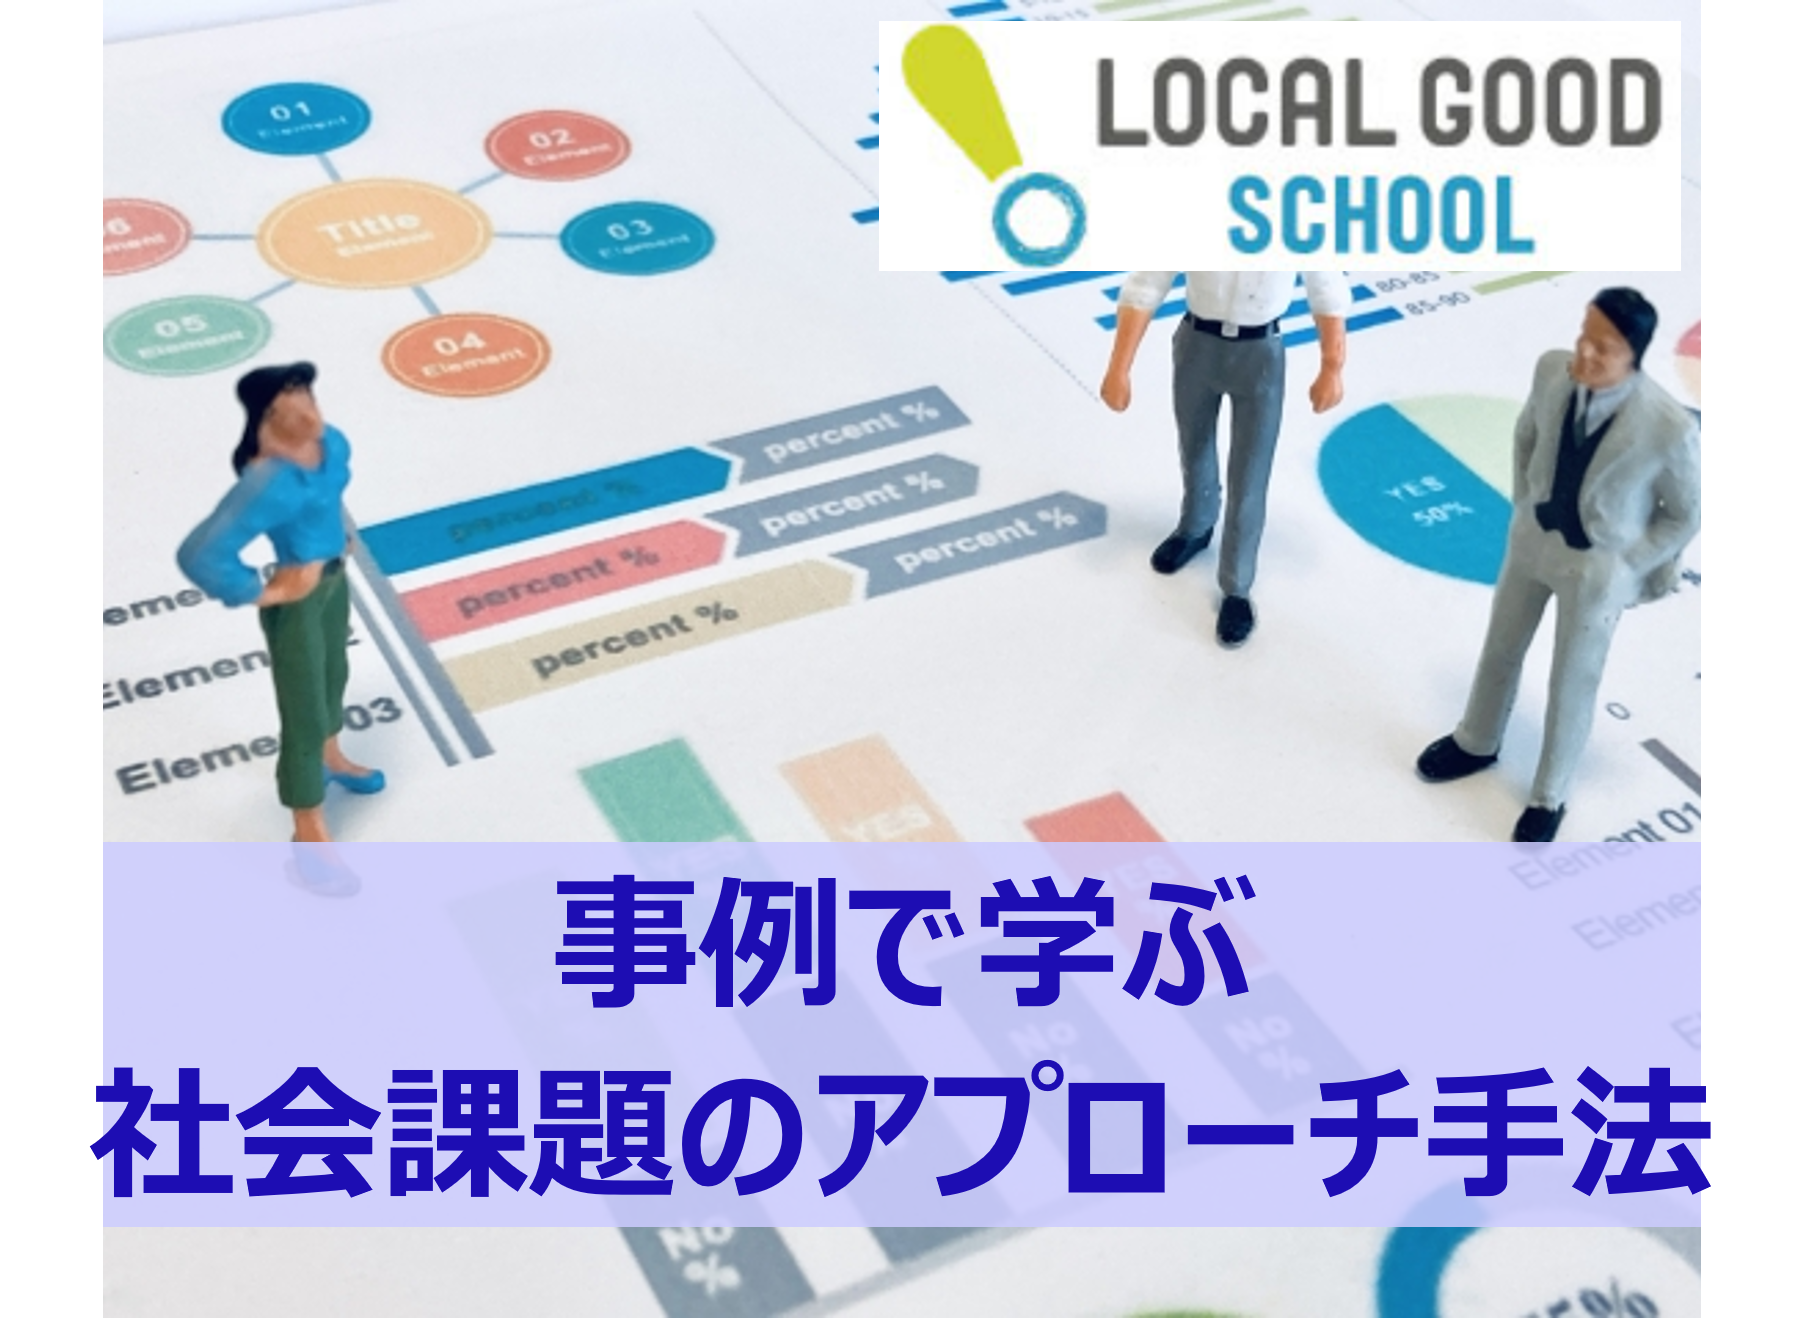 【LOCAL GOOD】横浜における社会課題解決に向けた取り組みについて